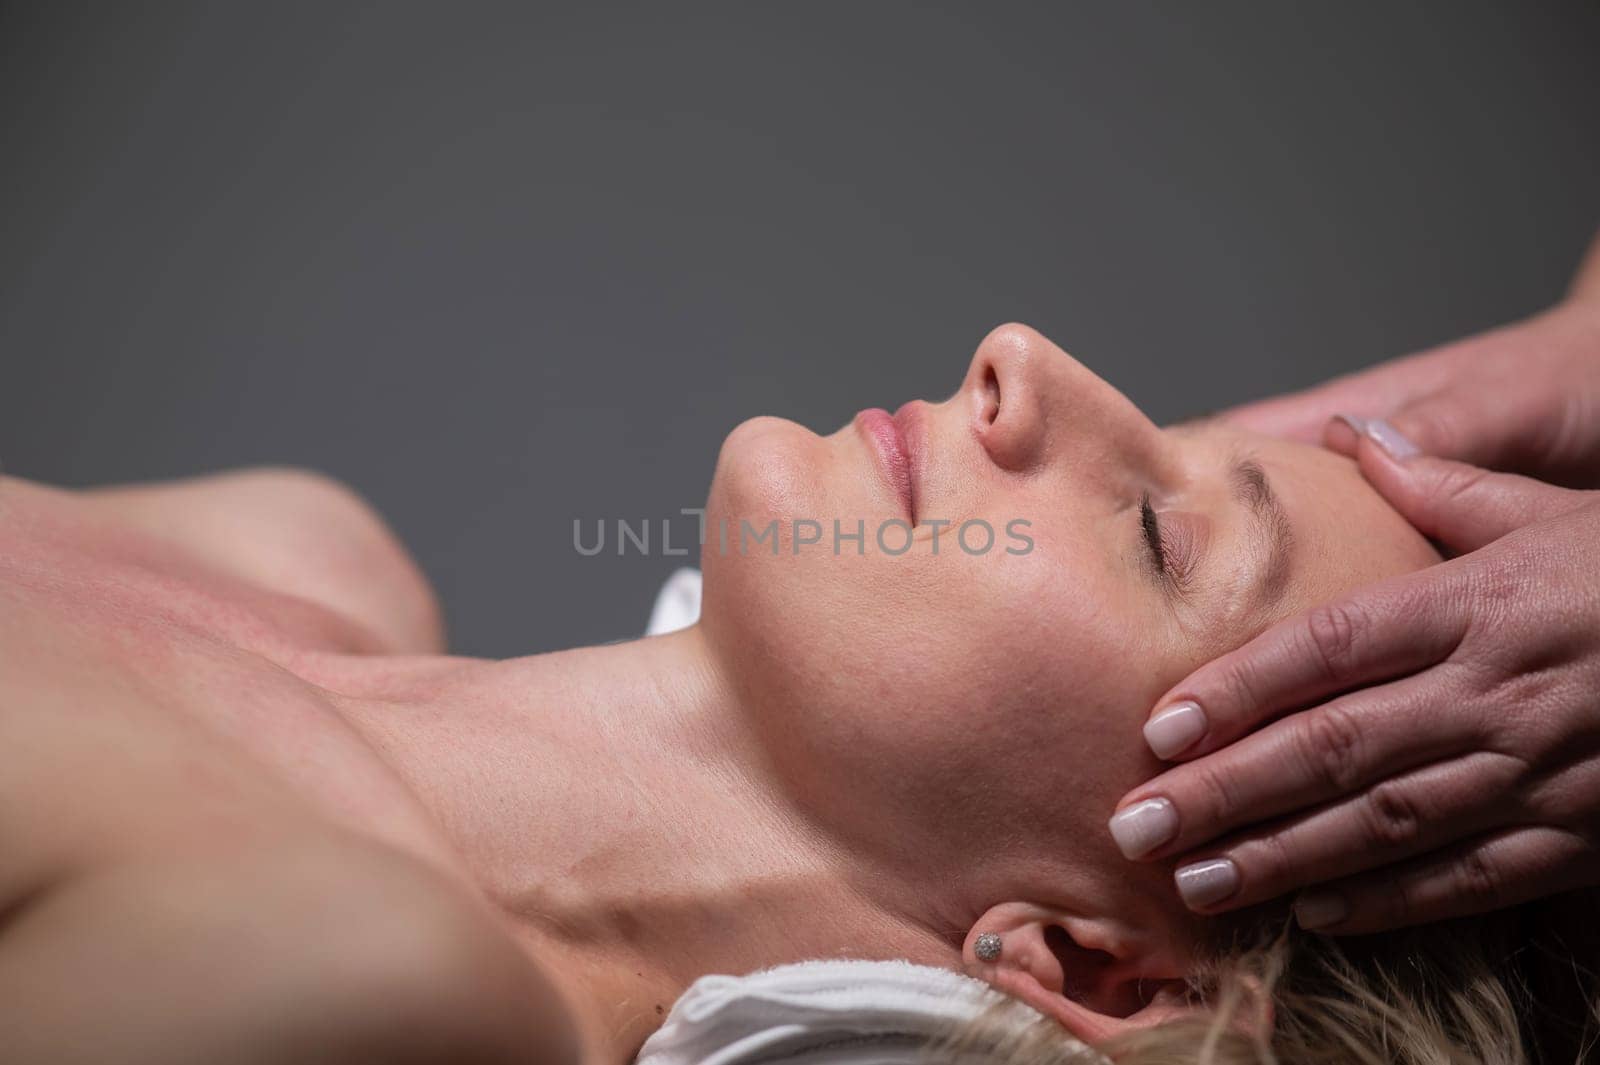 Caucasian woman undergoing head and face massage procedure